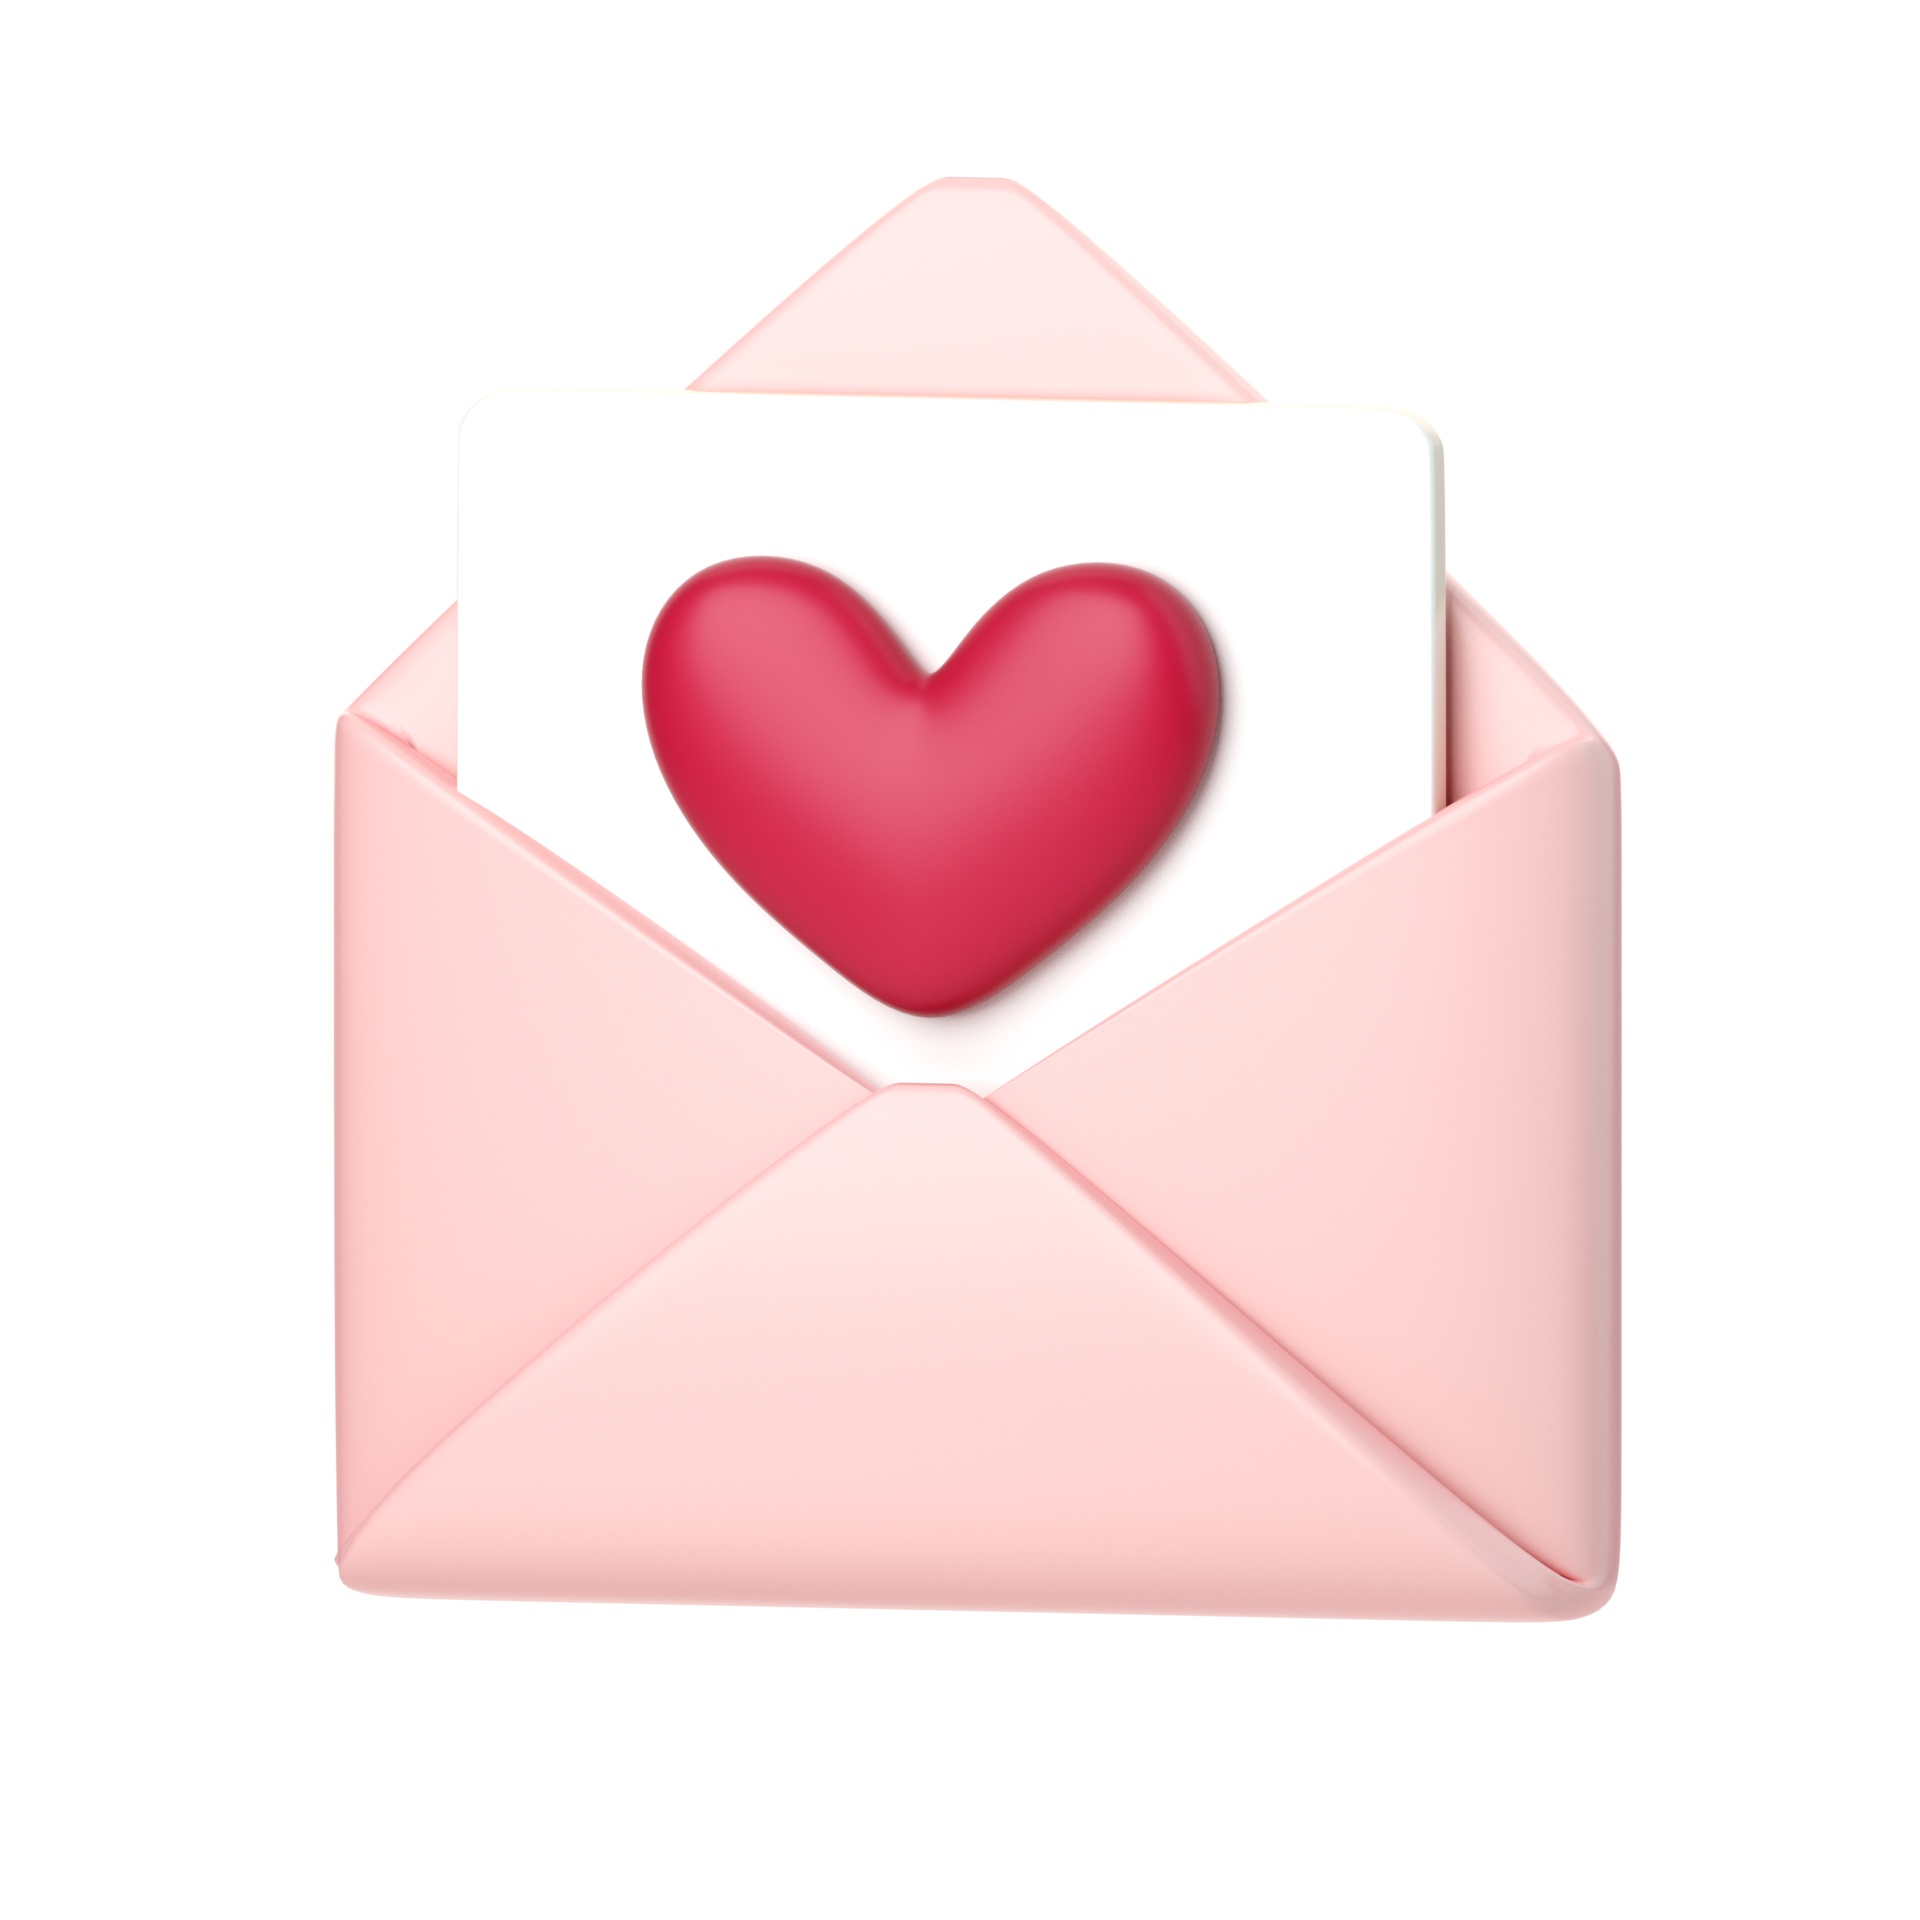 Gmail correo electrónico google internet iconos de la computadora, gmail,  amor, texto, corazón png